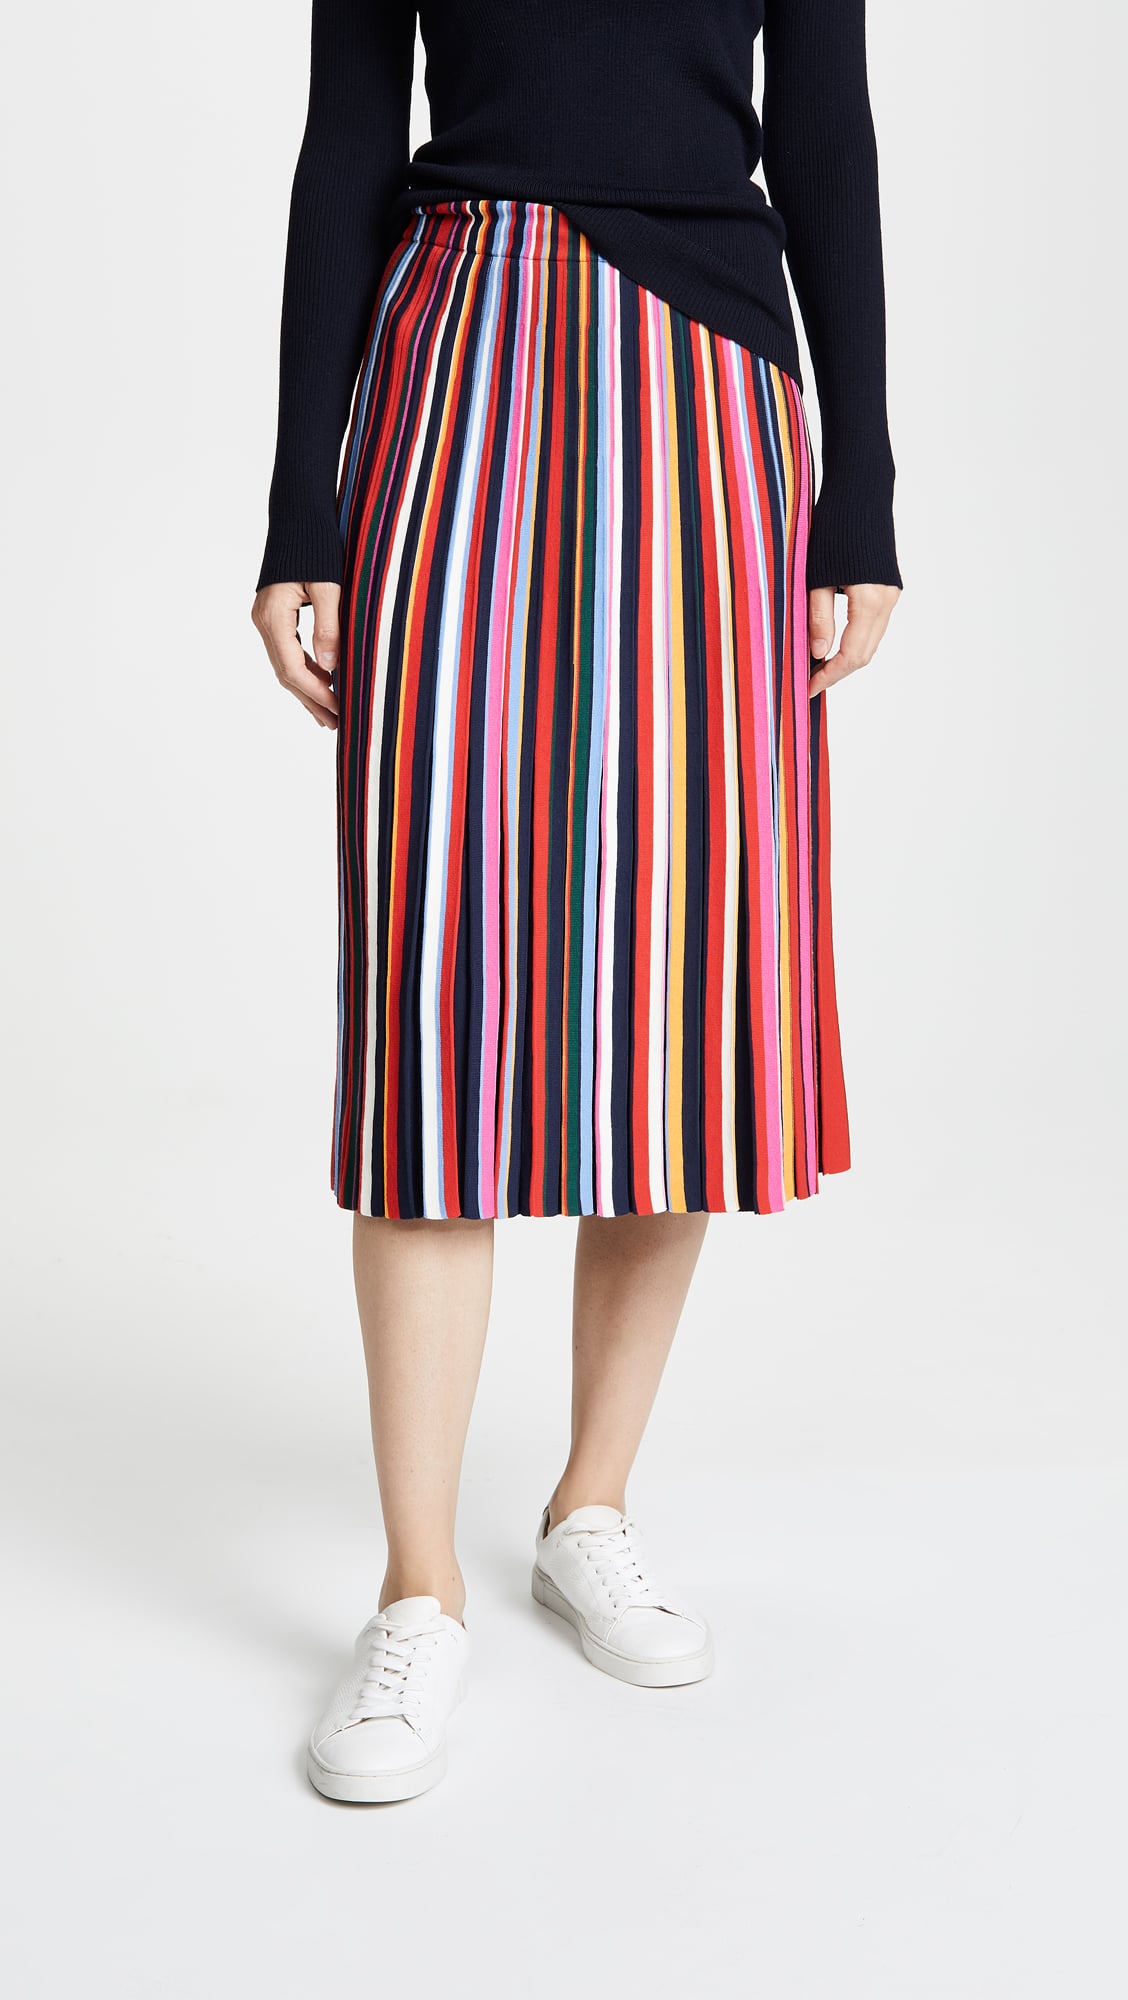 Tory Burch Ellis Skirt | Princess Victoria's Pleated Striped Midi Skirt  Should Be Your Final Summer Buy | POPSUGAR Fashion Photo 29